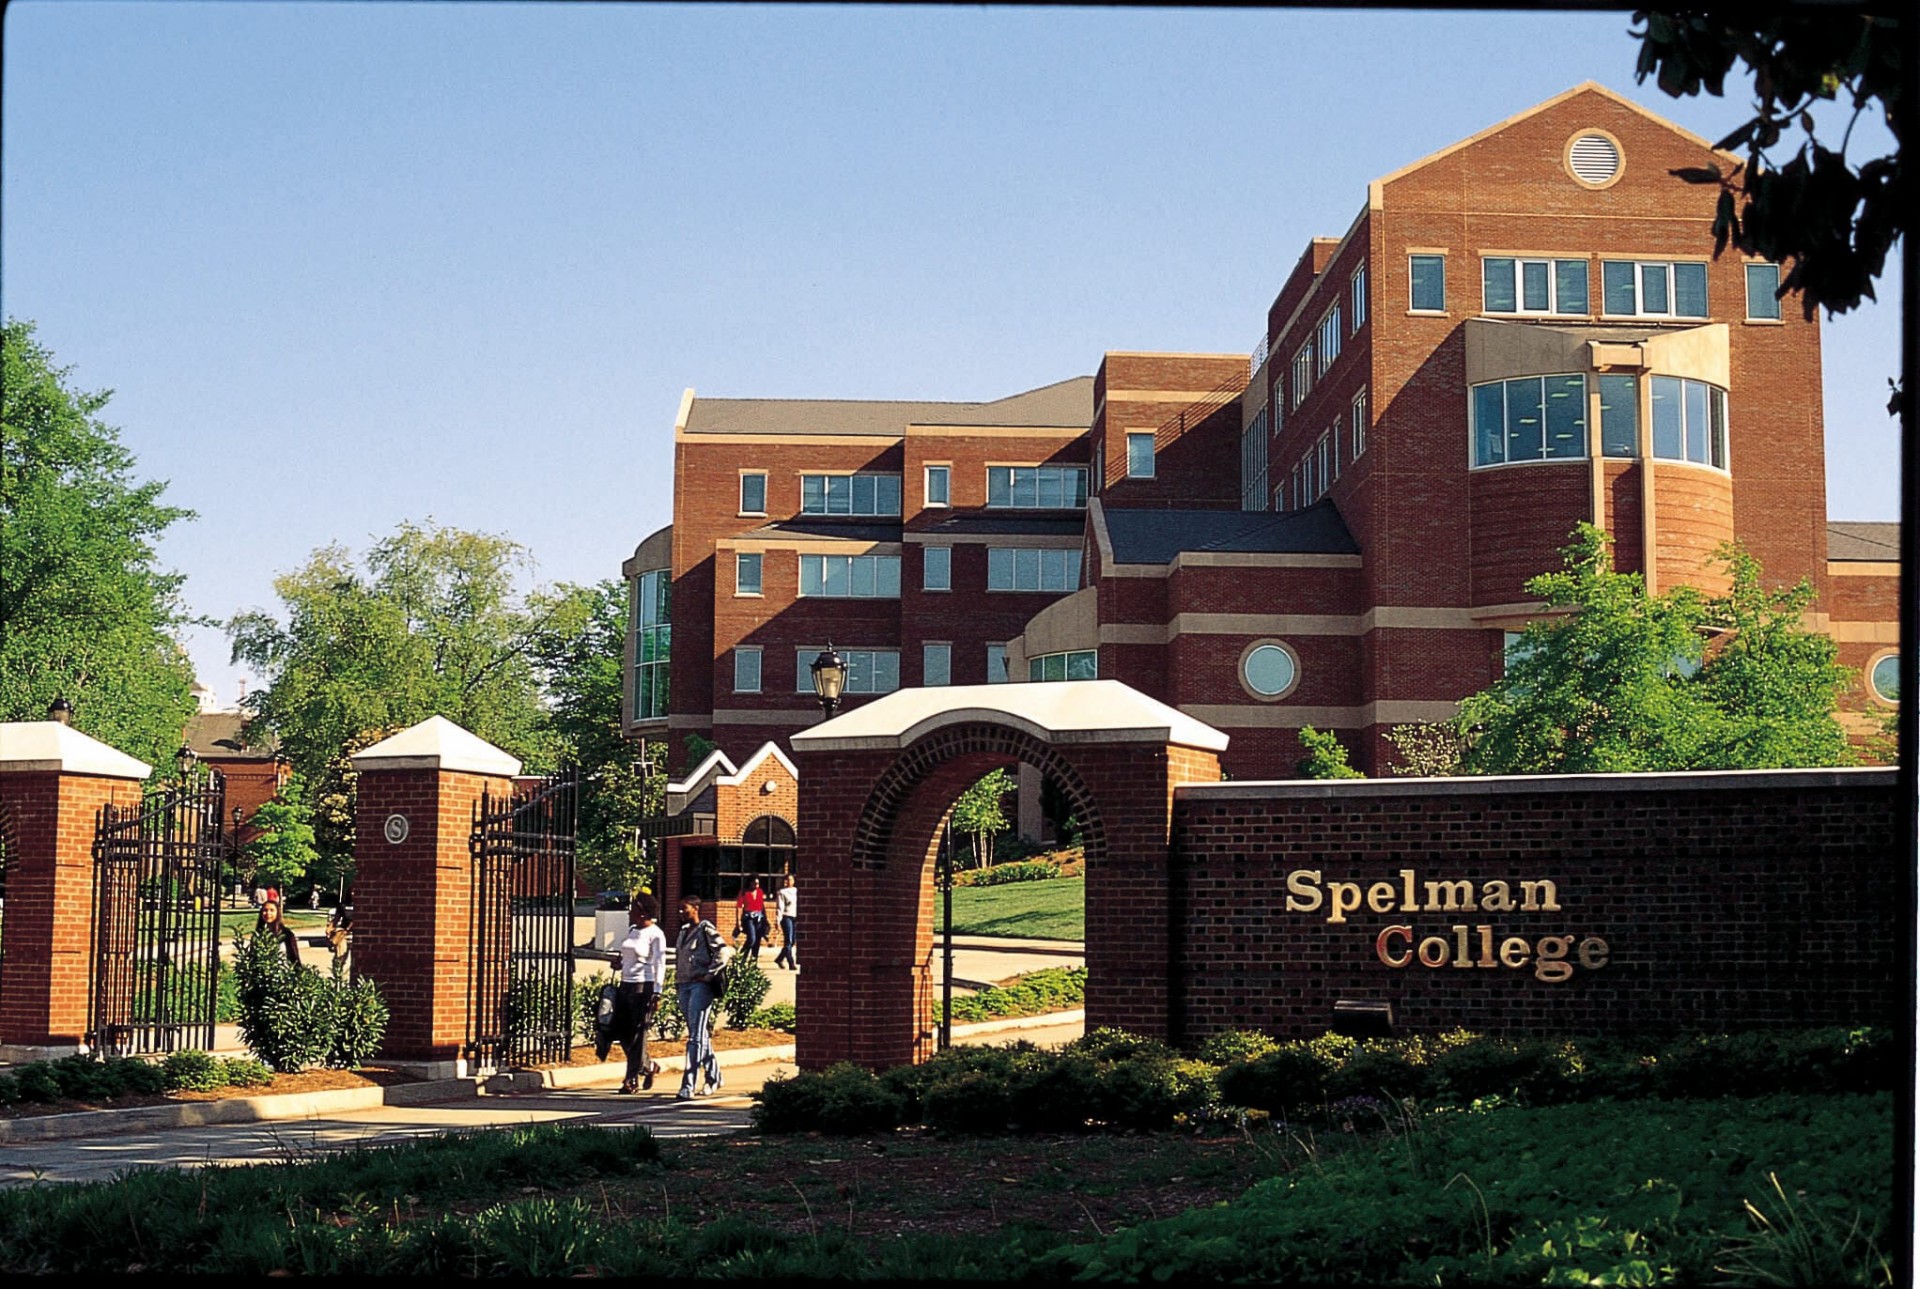 Spelman College sign